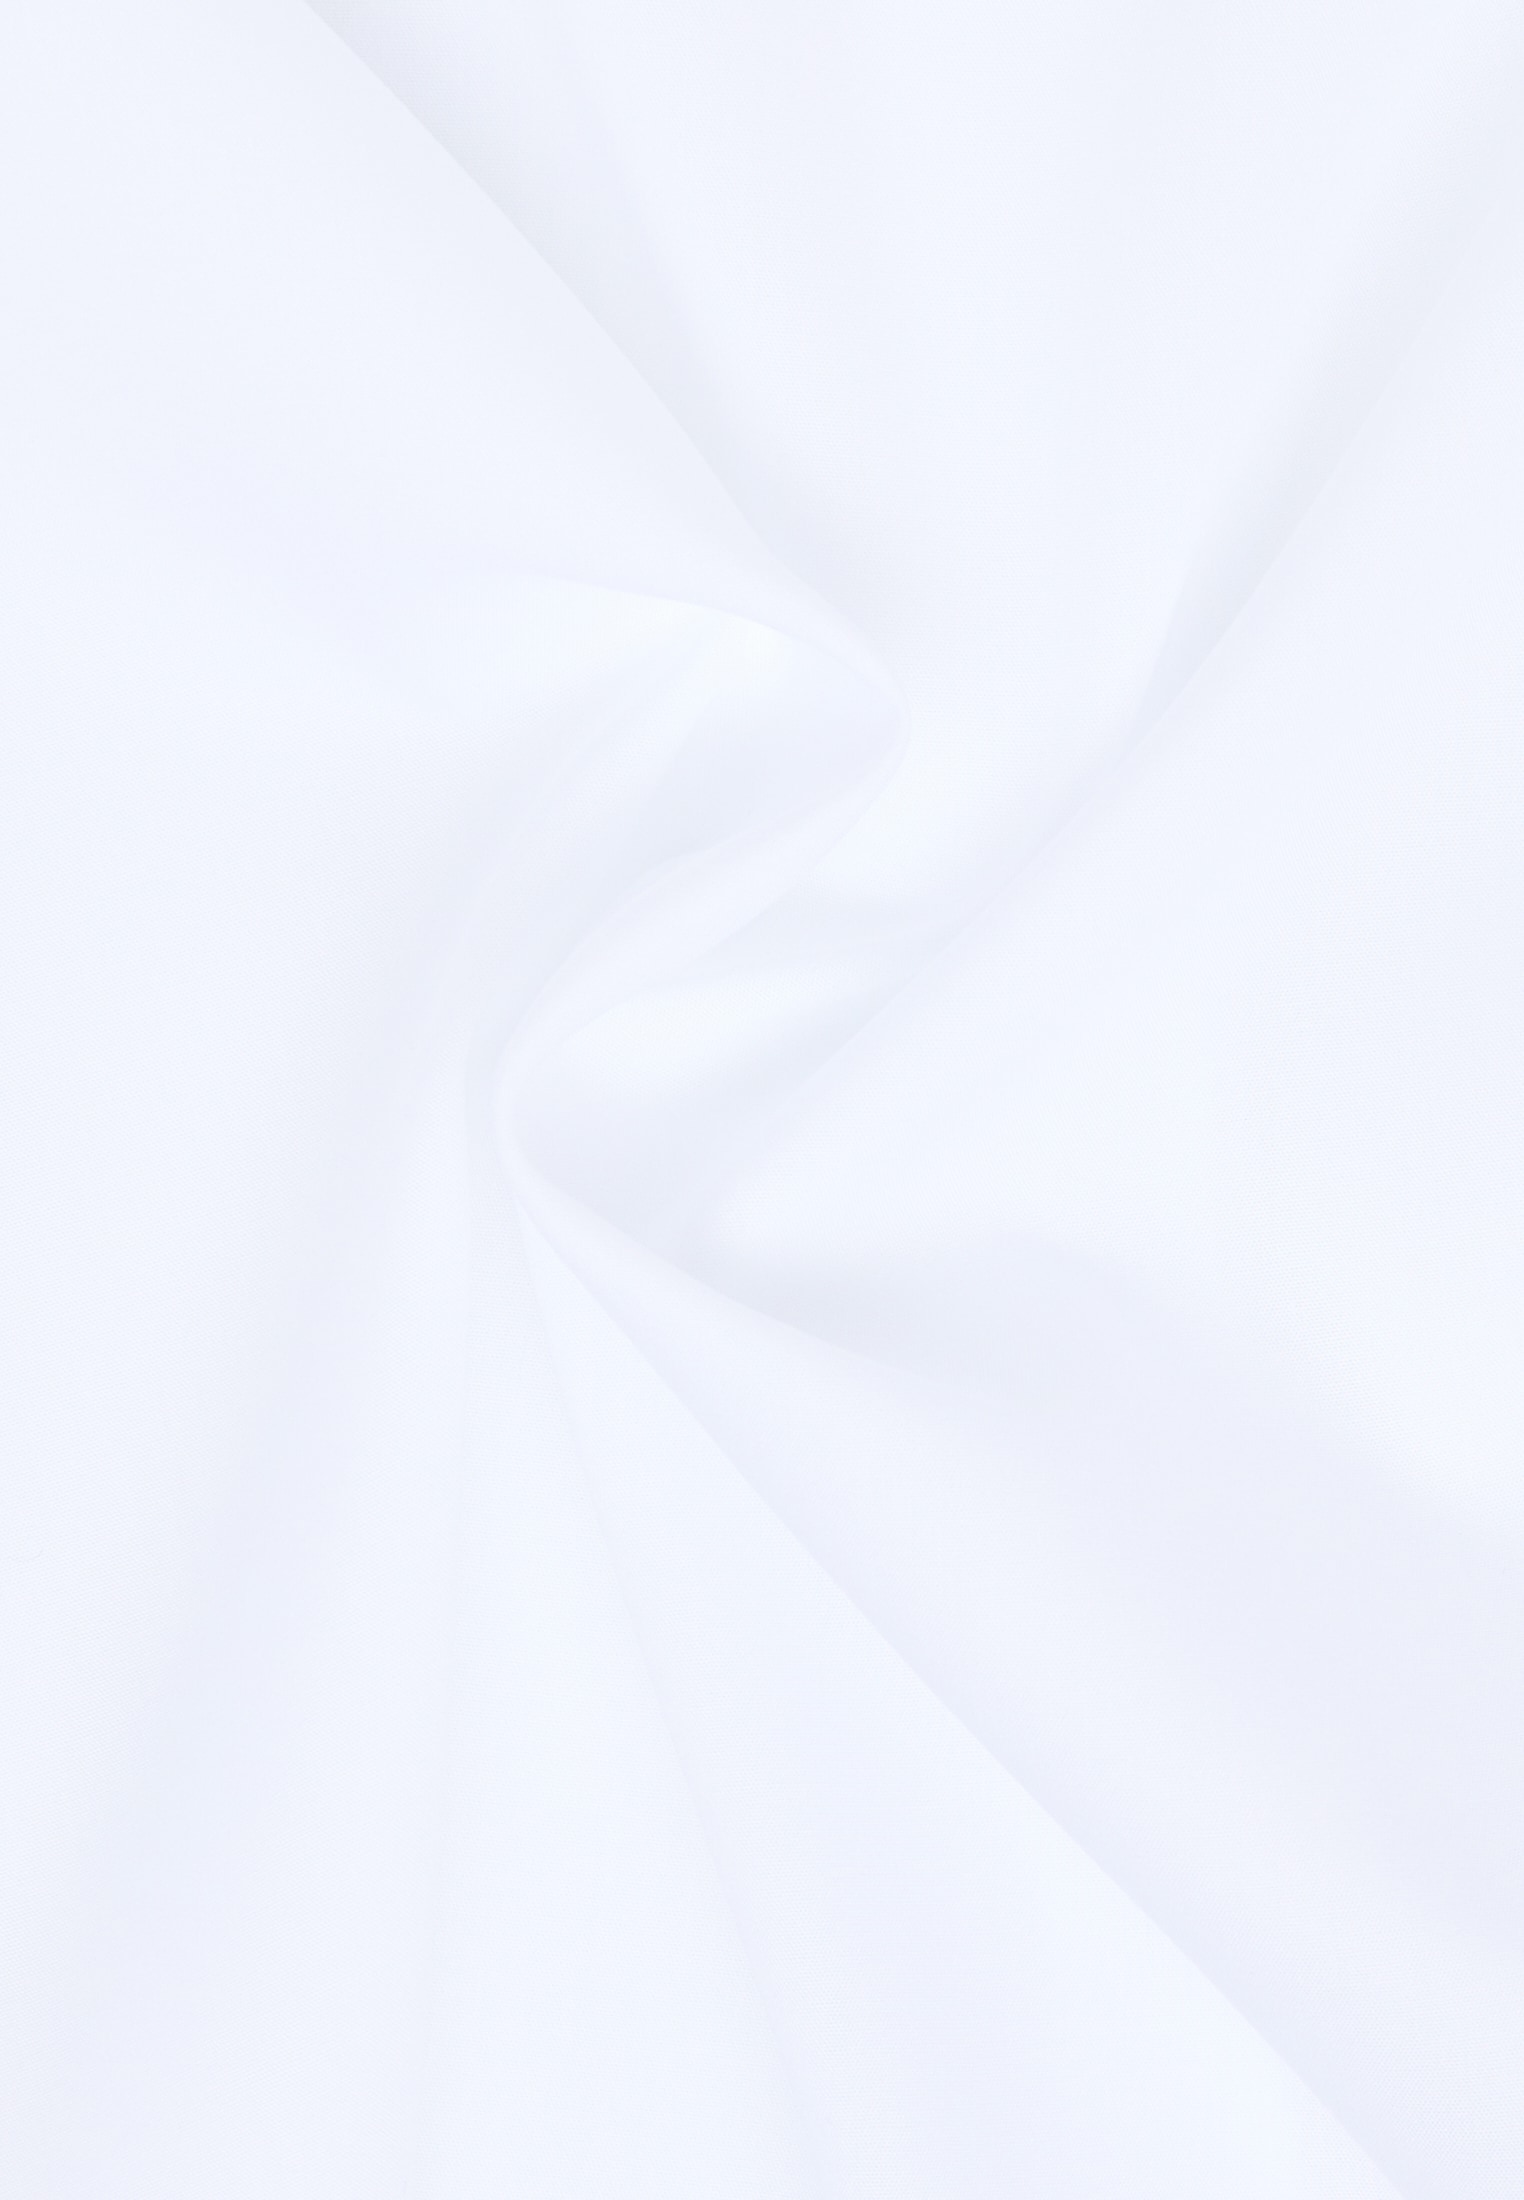 overhemdblouse in wit vlakte